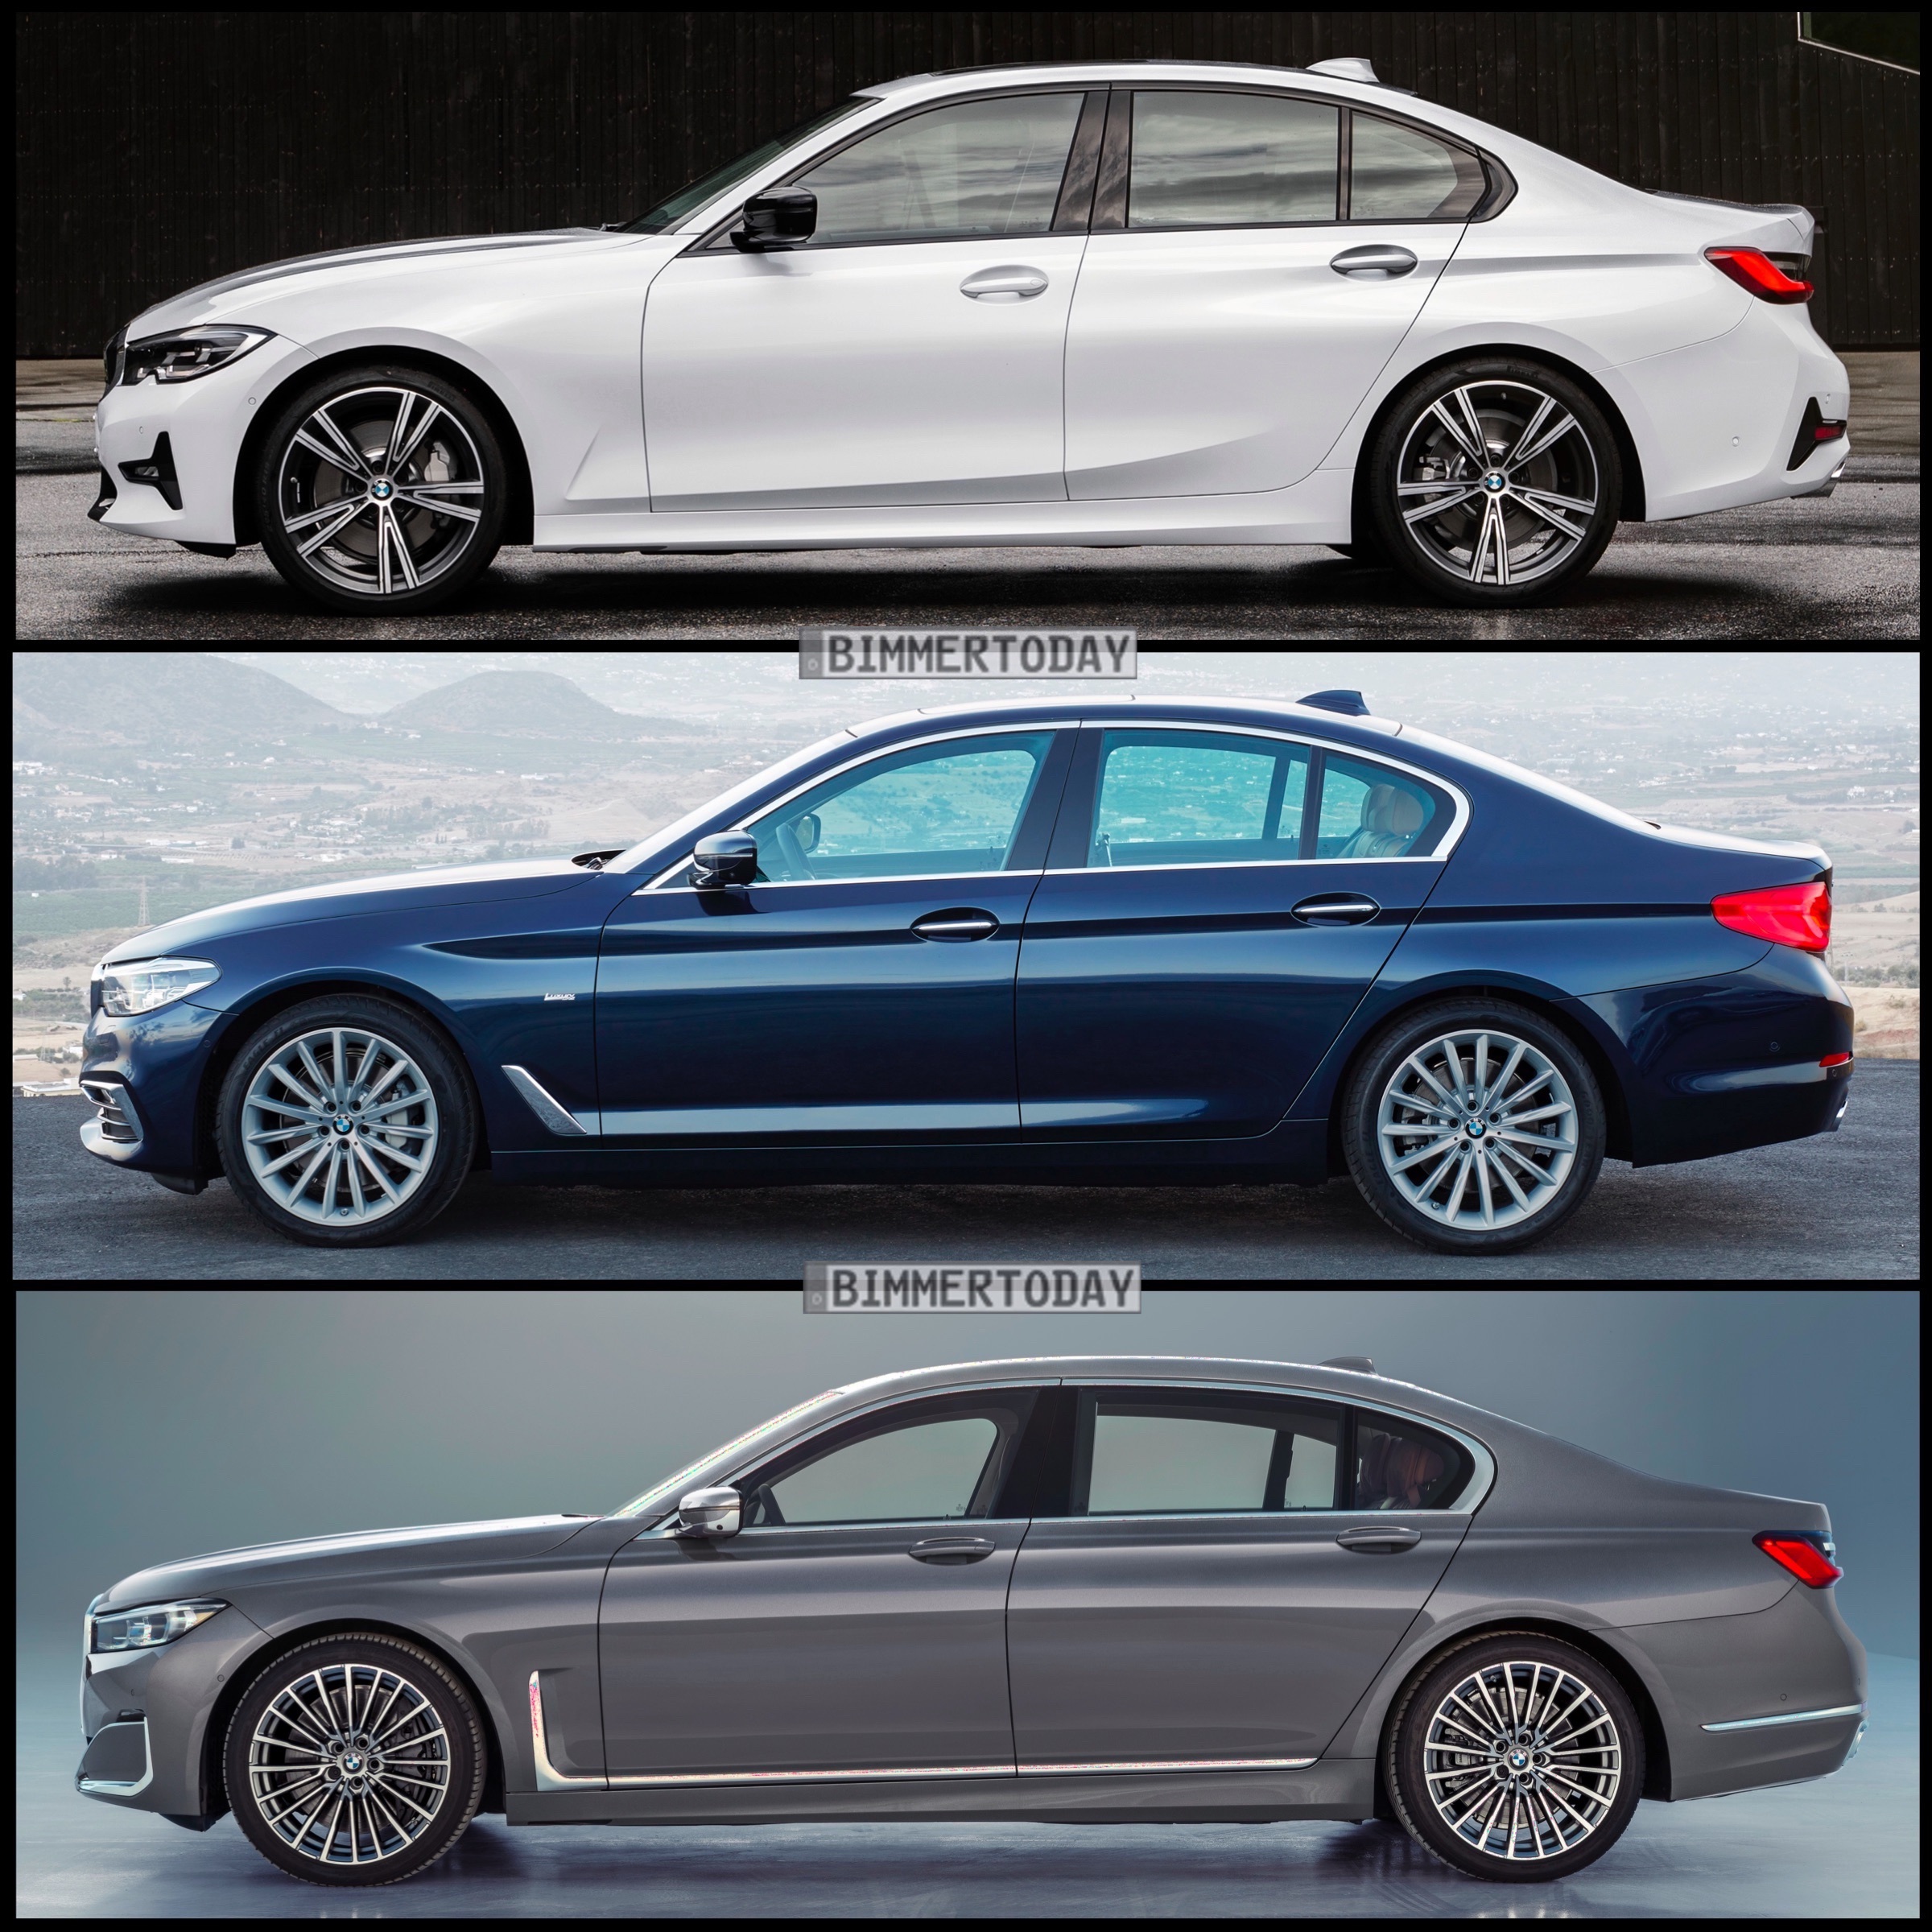 Bild-Vergleich-BMW-3er-G20-5er-G30-7er-G11-LCI-Limousine-2019-05.jpg